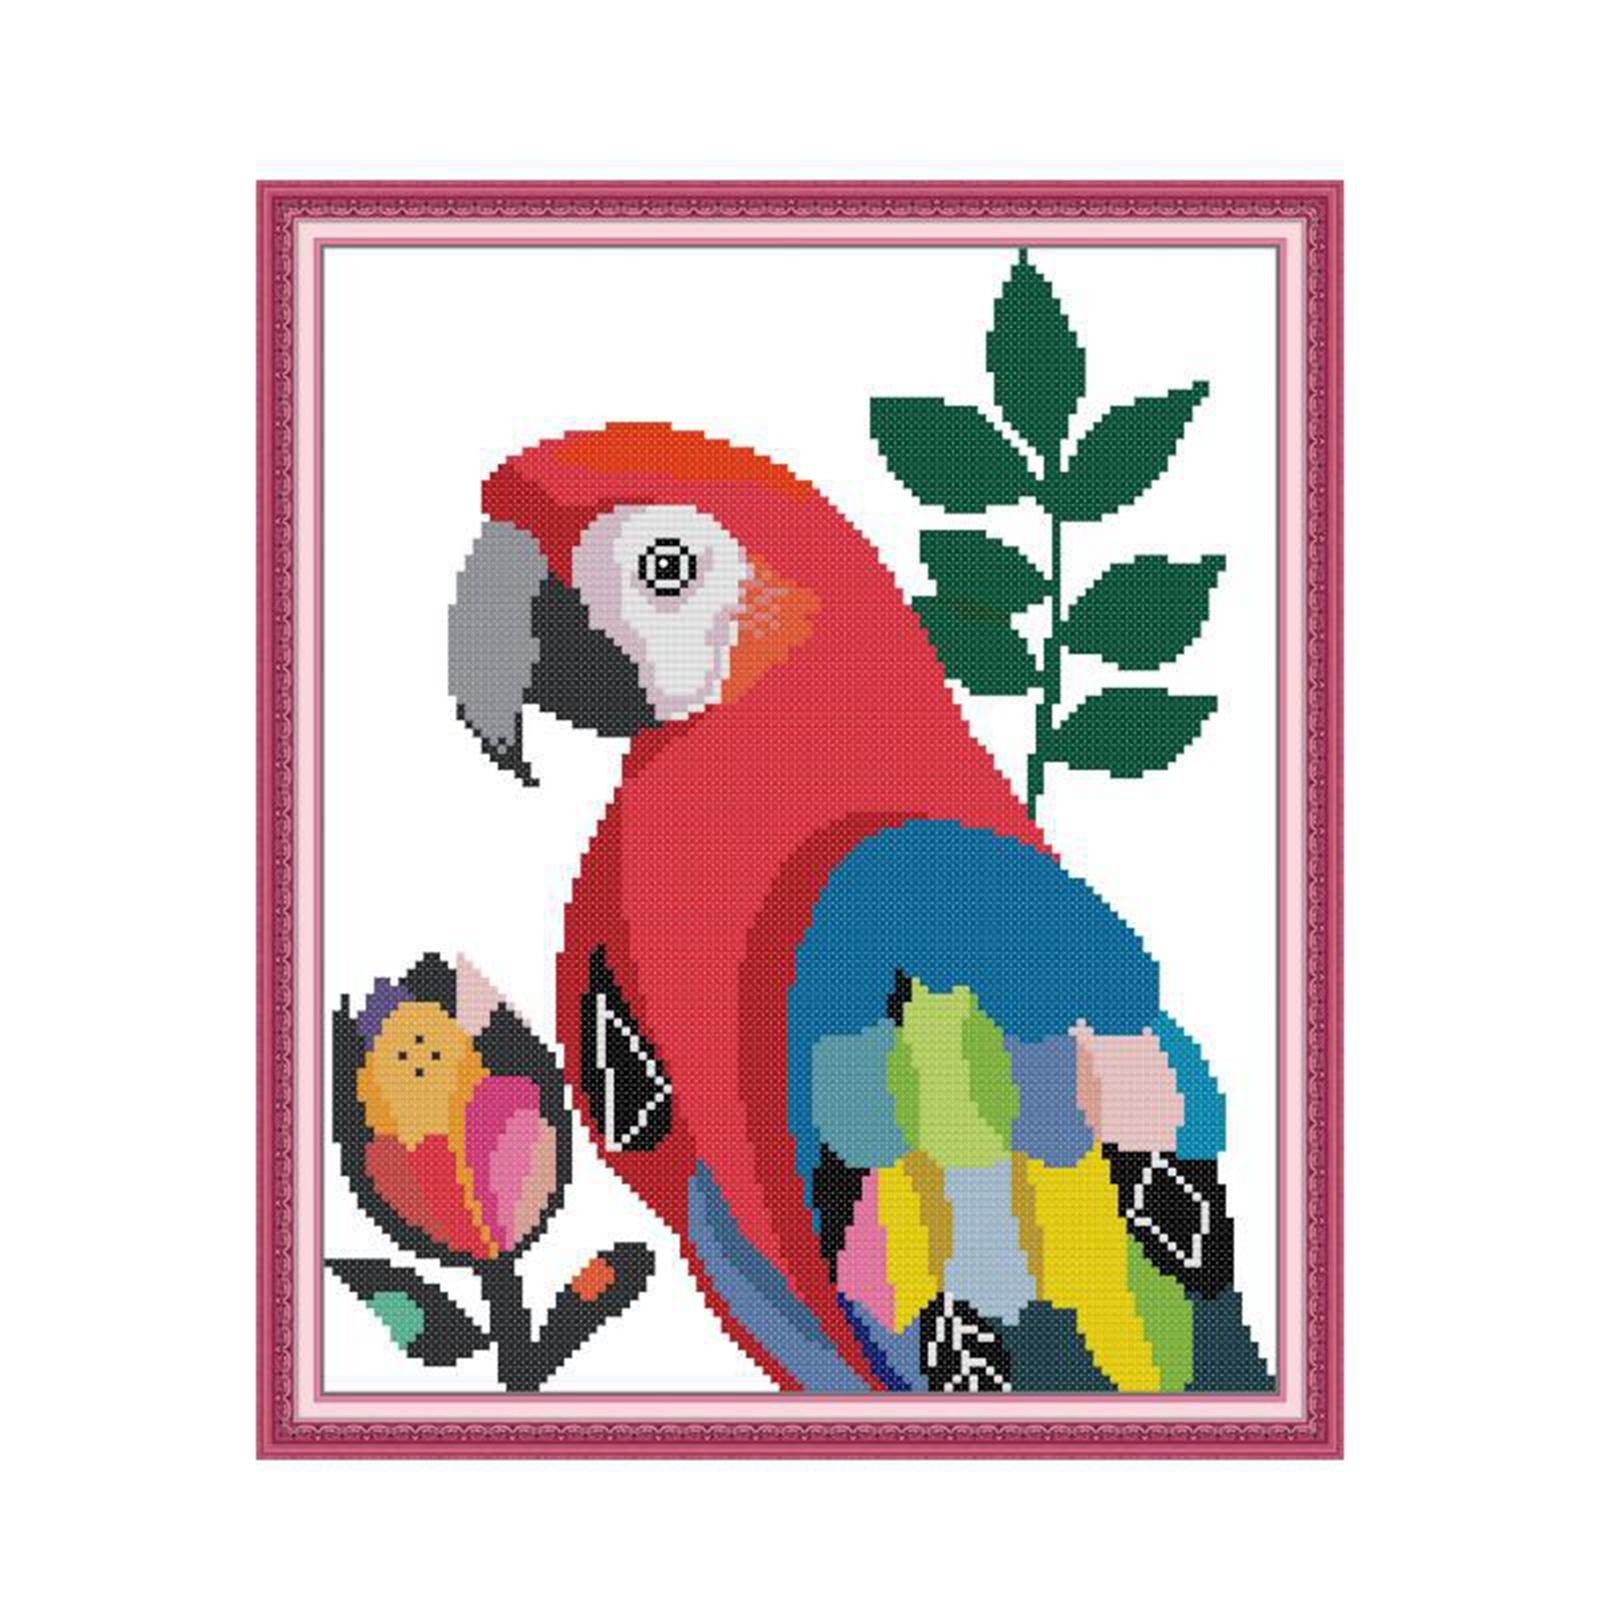 Parrot Cross Stitch Kit Bird Pattern Needlework Full Embroidery Starter Kits